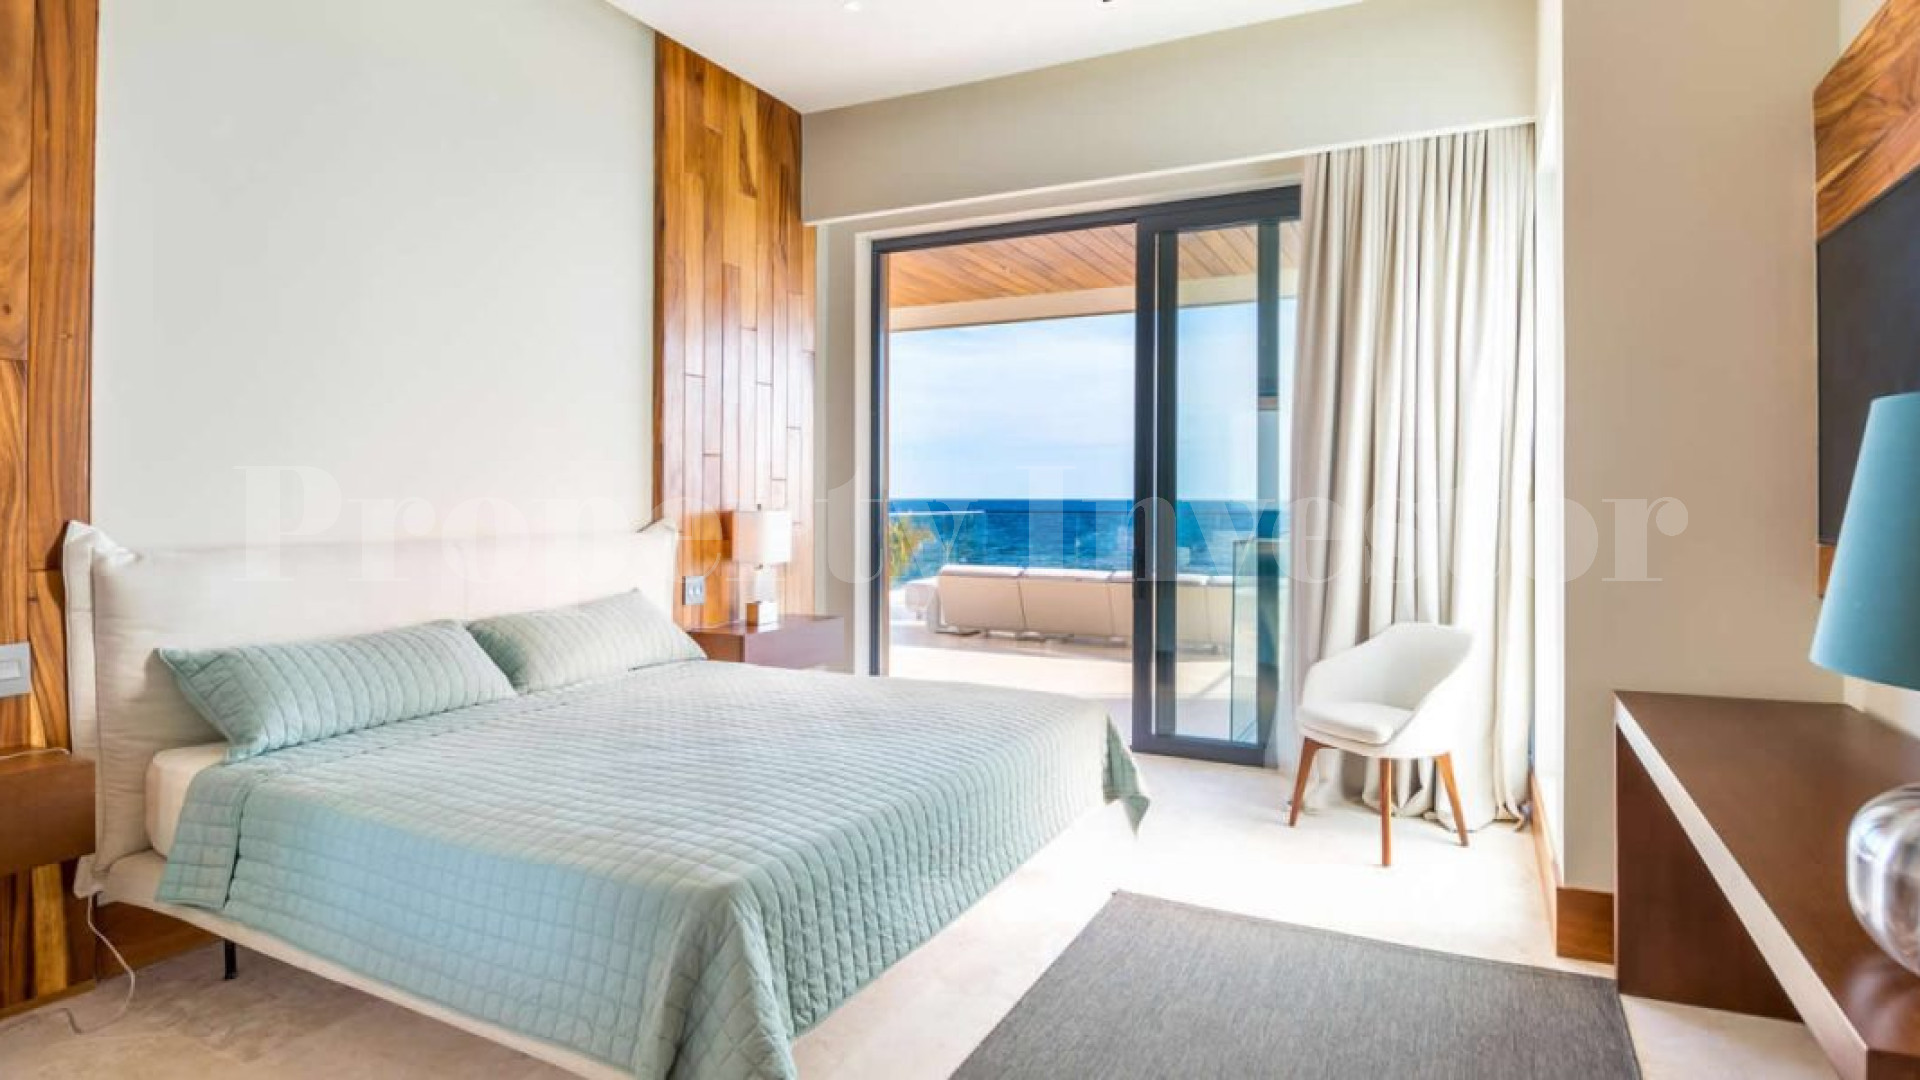 Unbelievable 7 Bedroom Luxury Beachfront Villa for Sale in La Romana, Dominican Republic